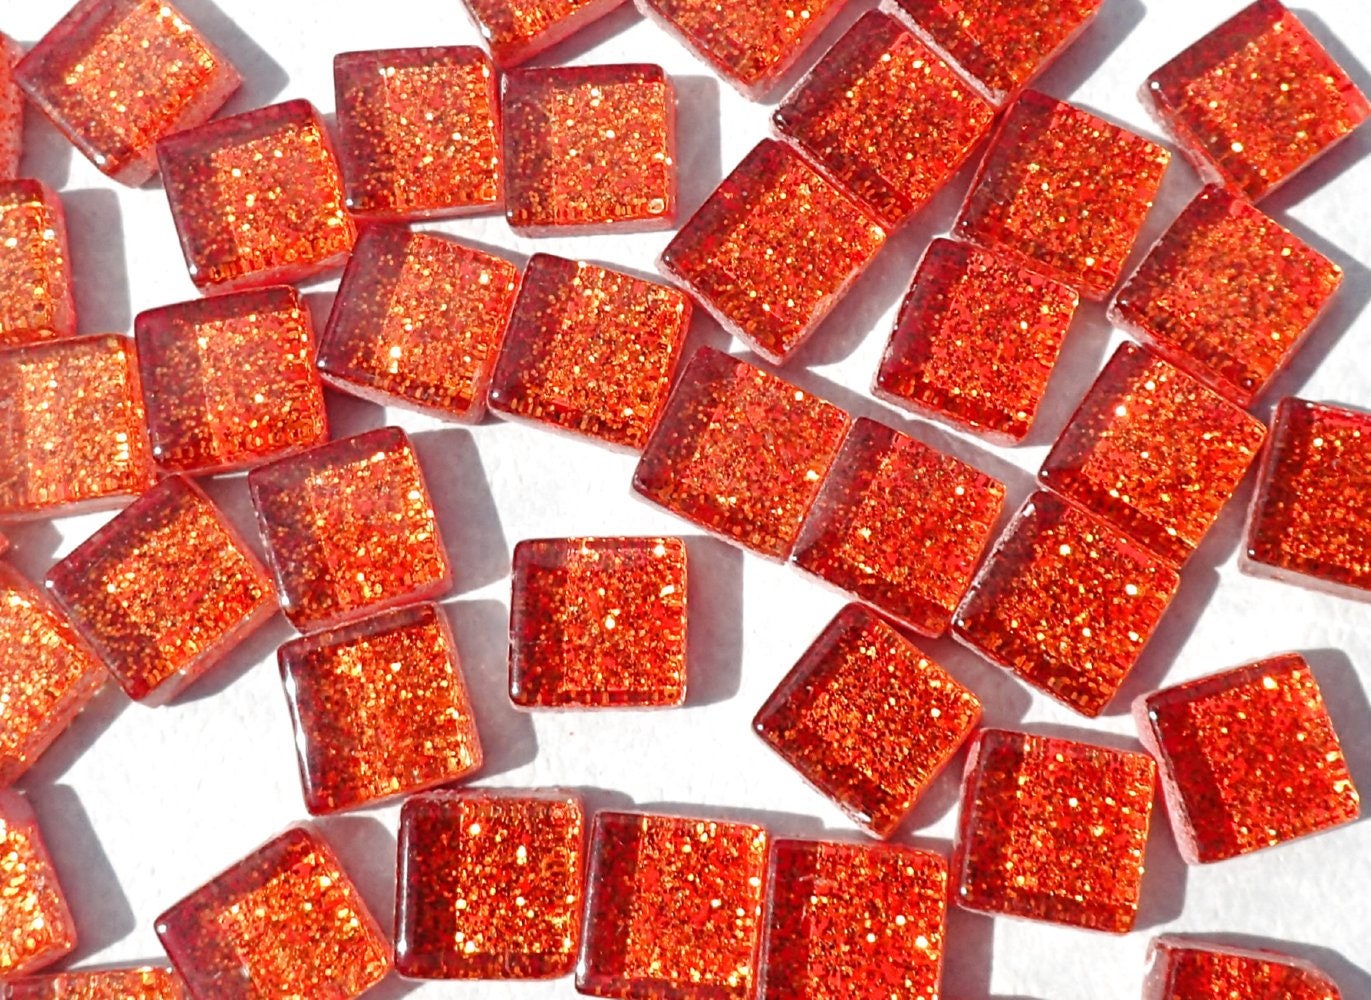 Orange Tiny Glitter Tiles - 1 cm Squares - 100g - Over 100 Metallic Tiny Glass Tiles in Roasted Orange